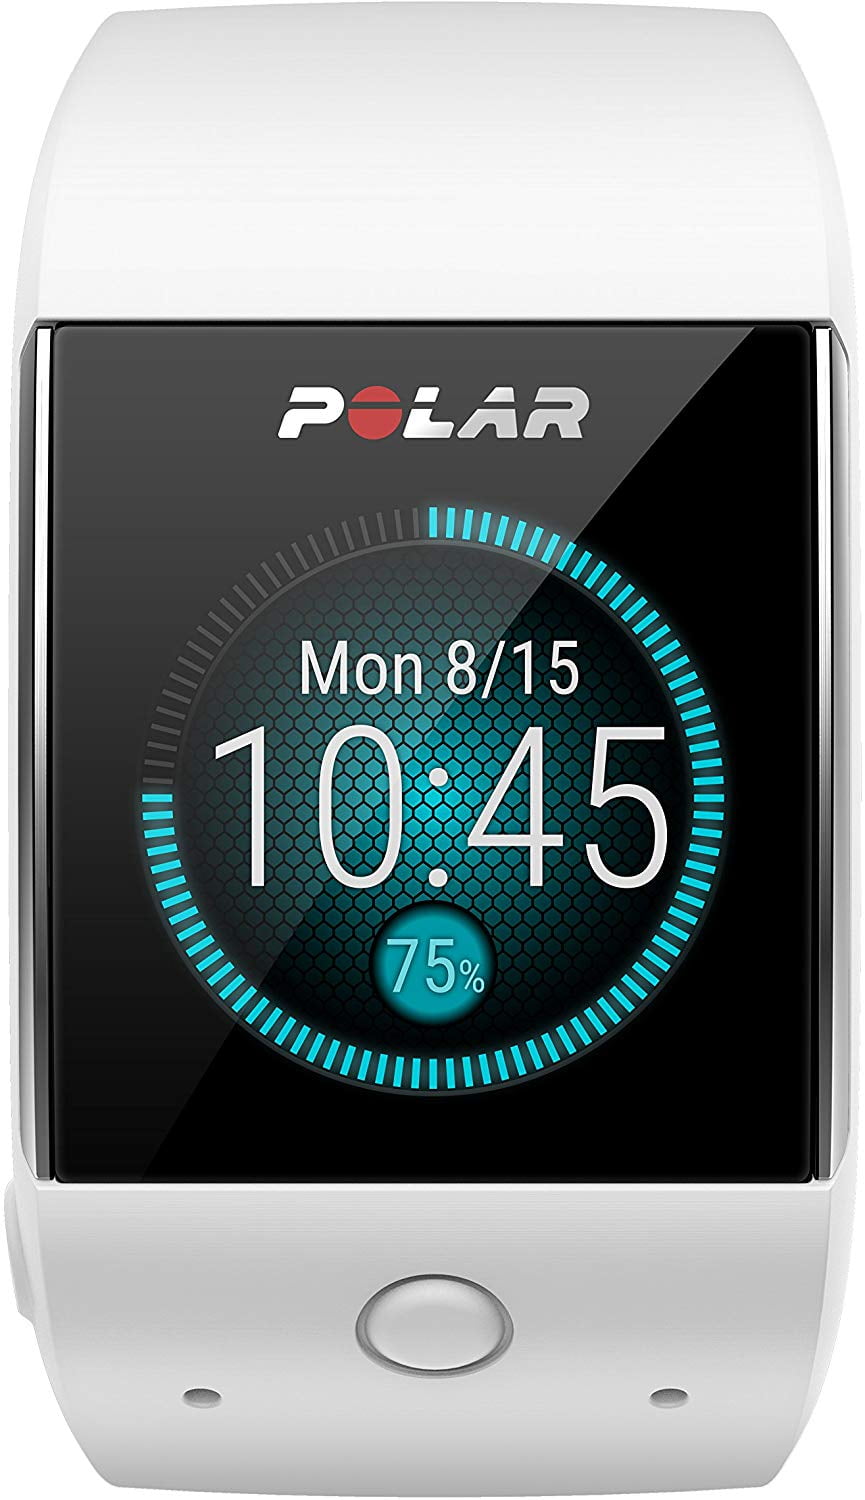 Polar M600 GPS Android Sport Smart Digital Watch, White Walmart.com